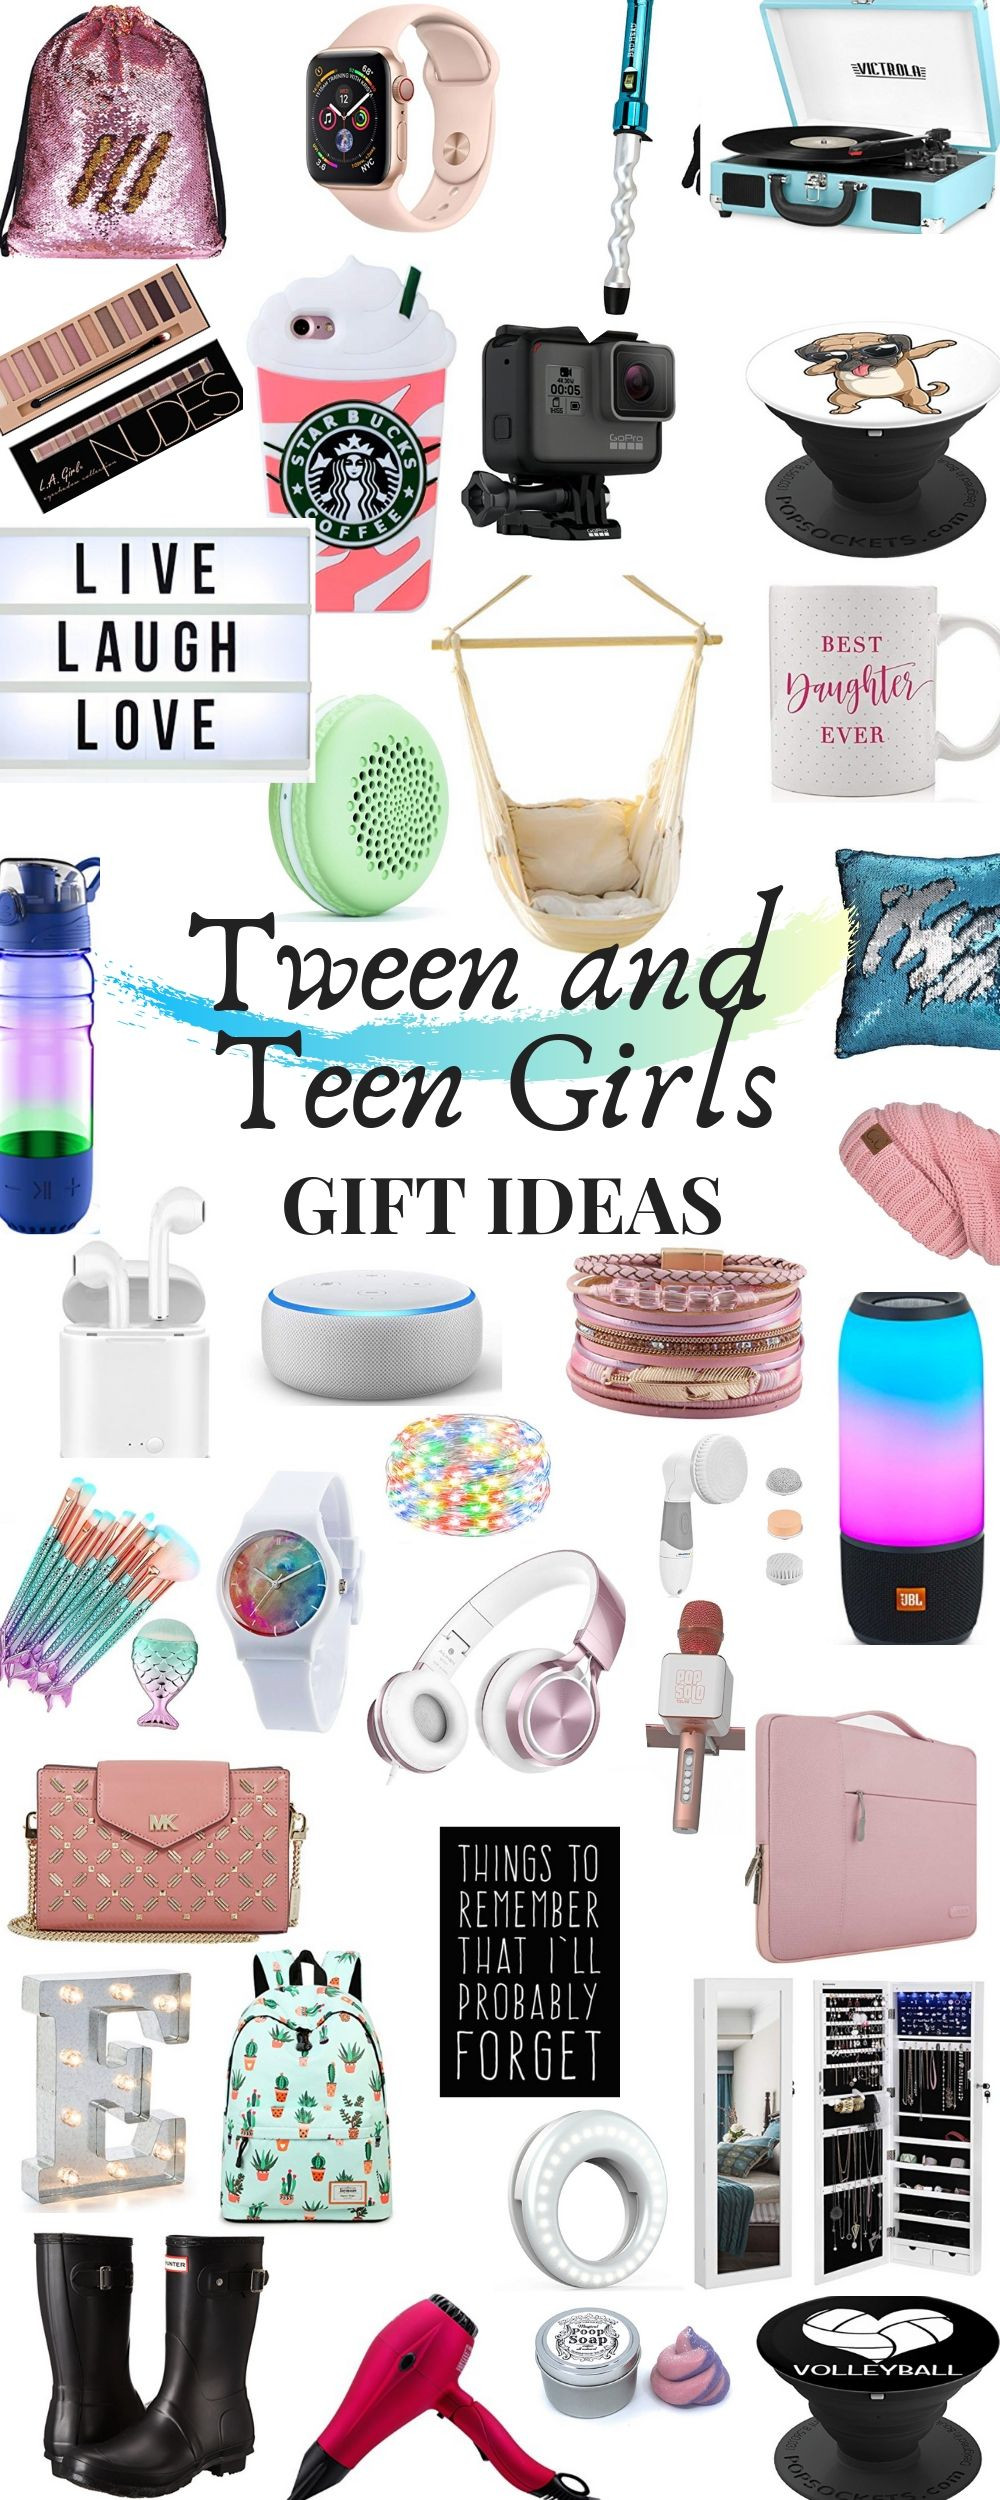 Cool Gift Ideas For Teen Girls
 Teenage Girl and Tween Girl Gift Guide 2019